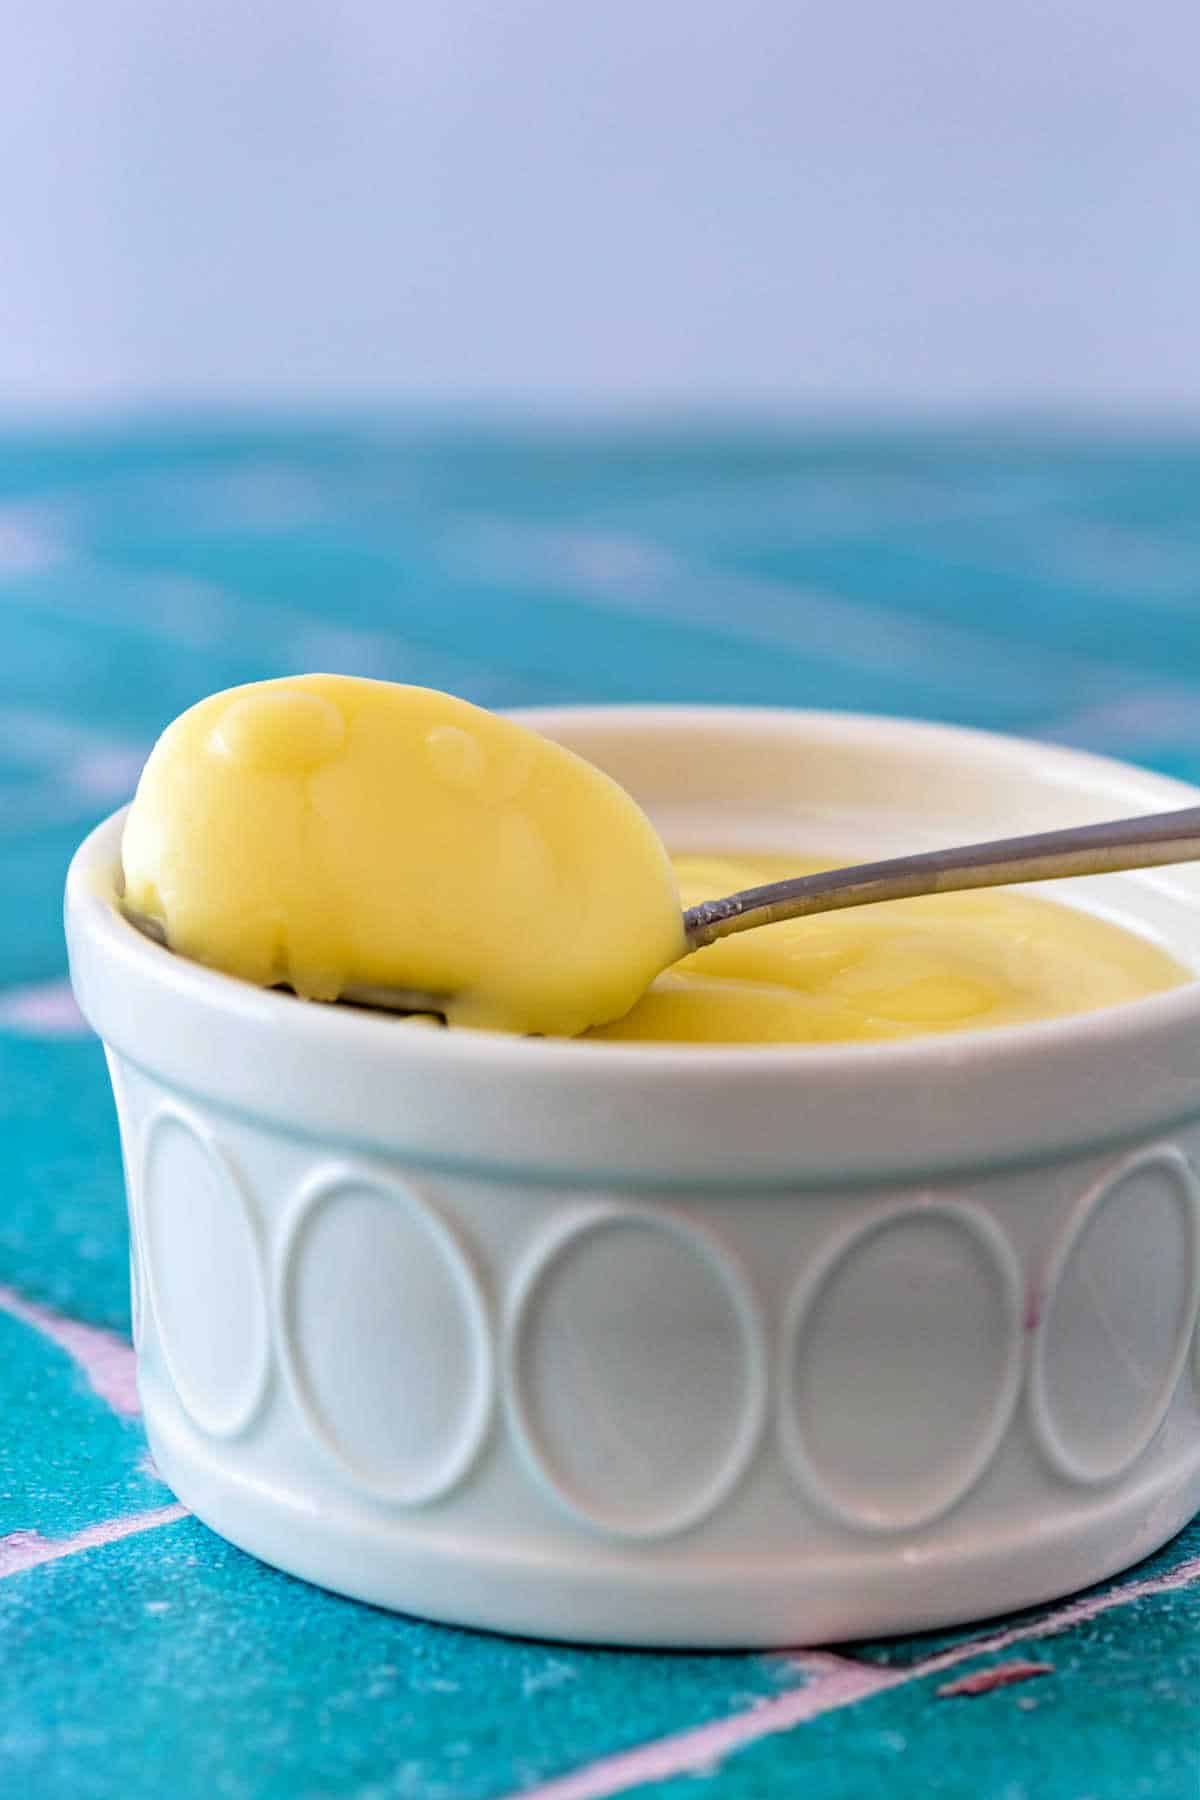 A spoonful of pale yellow lemon posset on a spoon balanced on the edge of a white ramekin of posset.